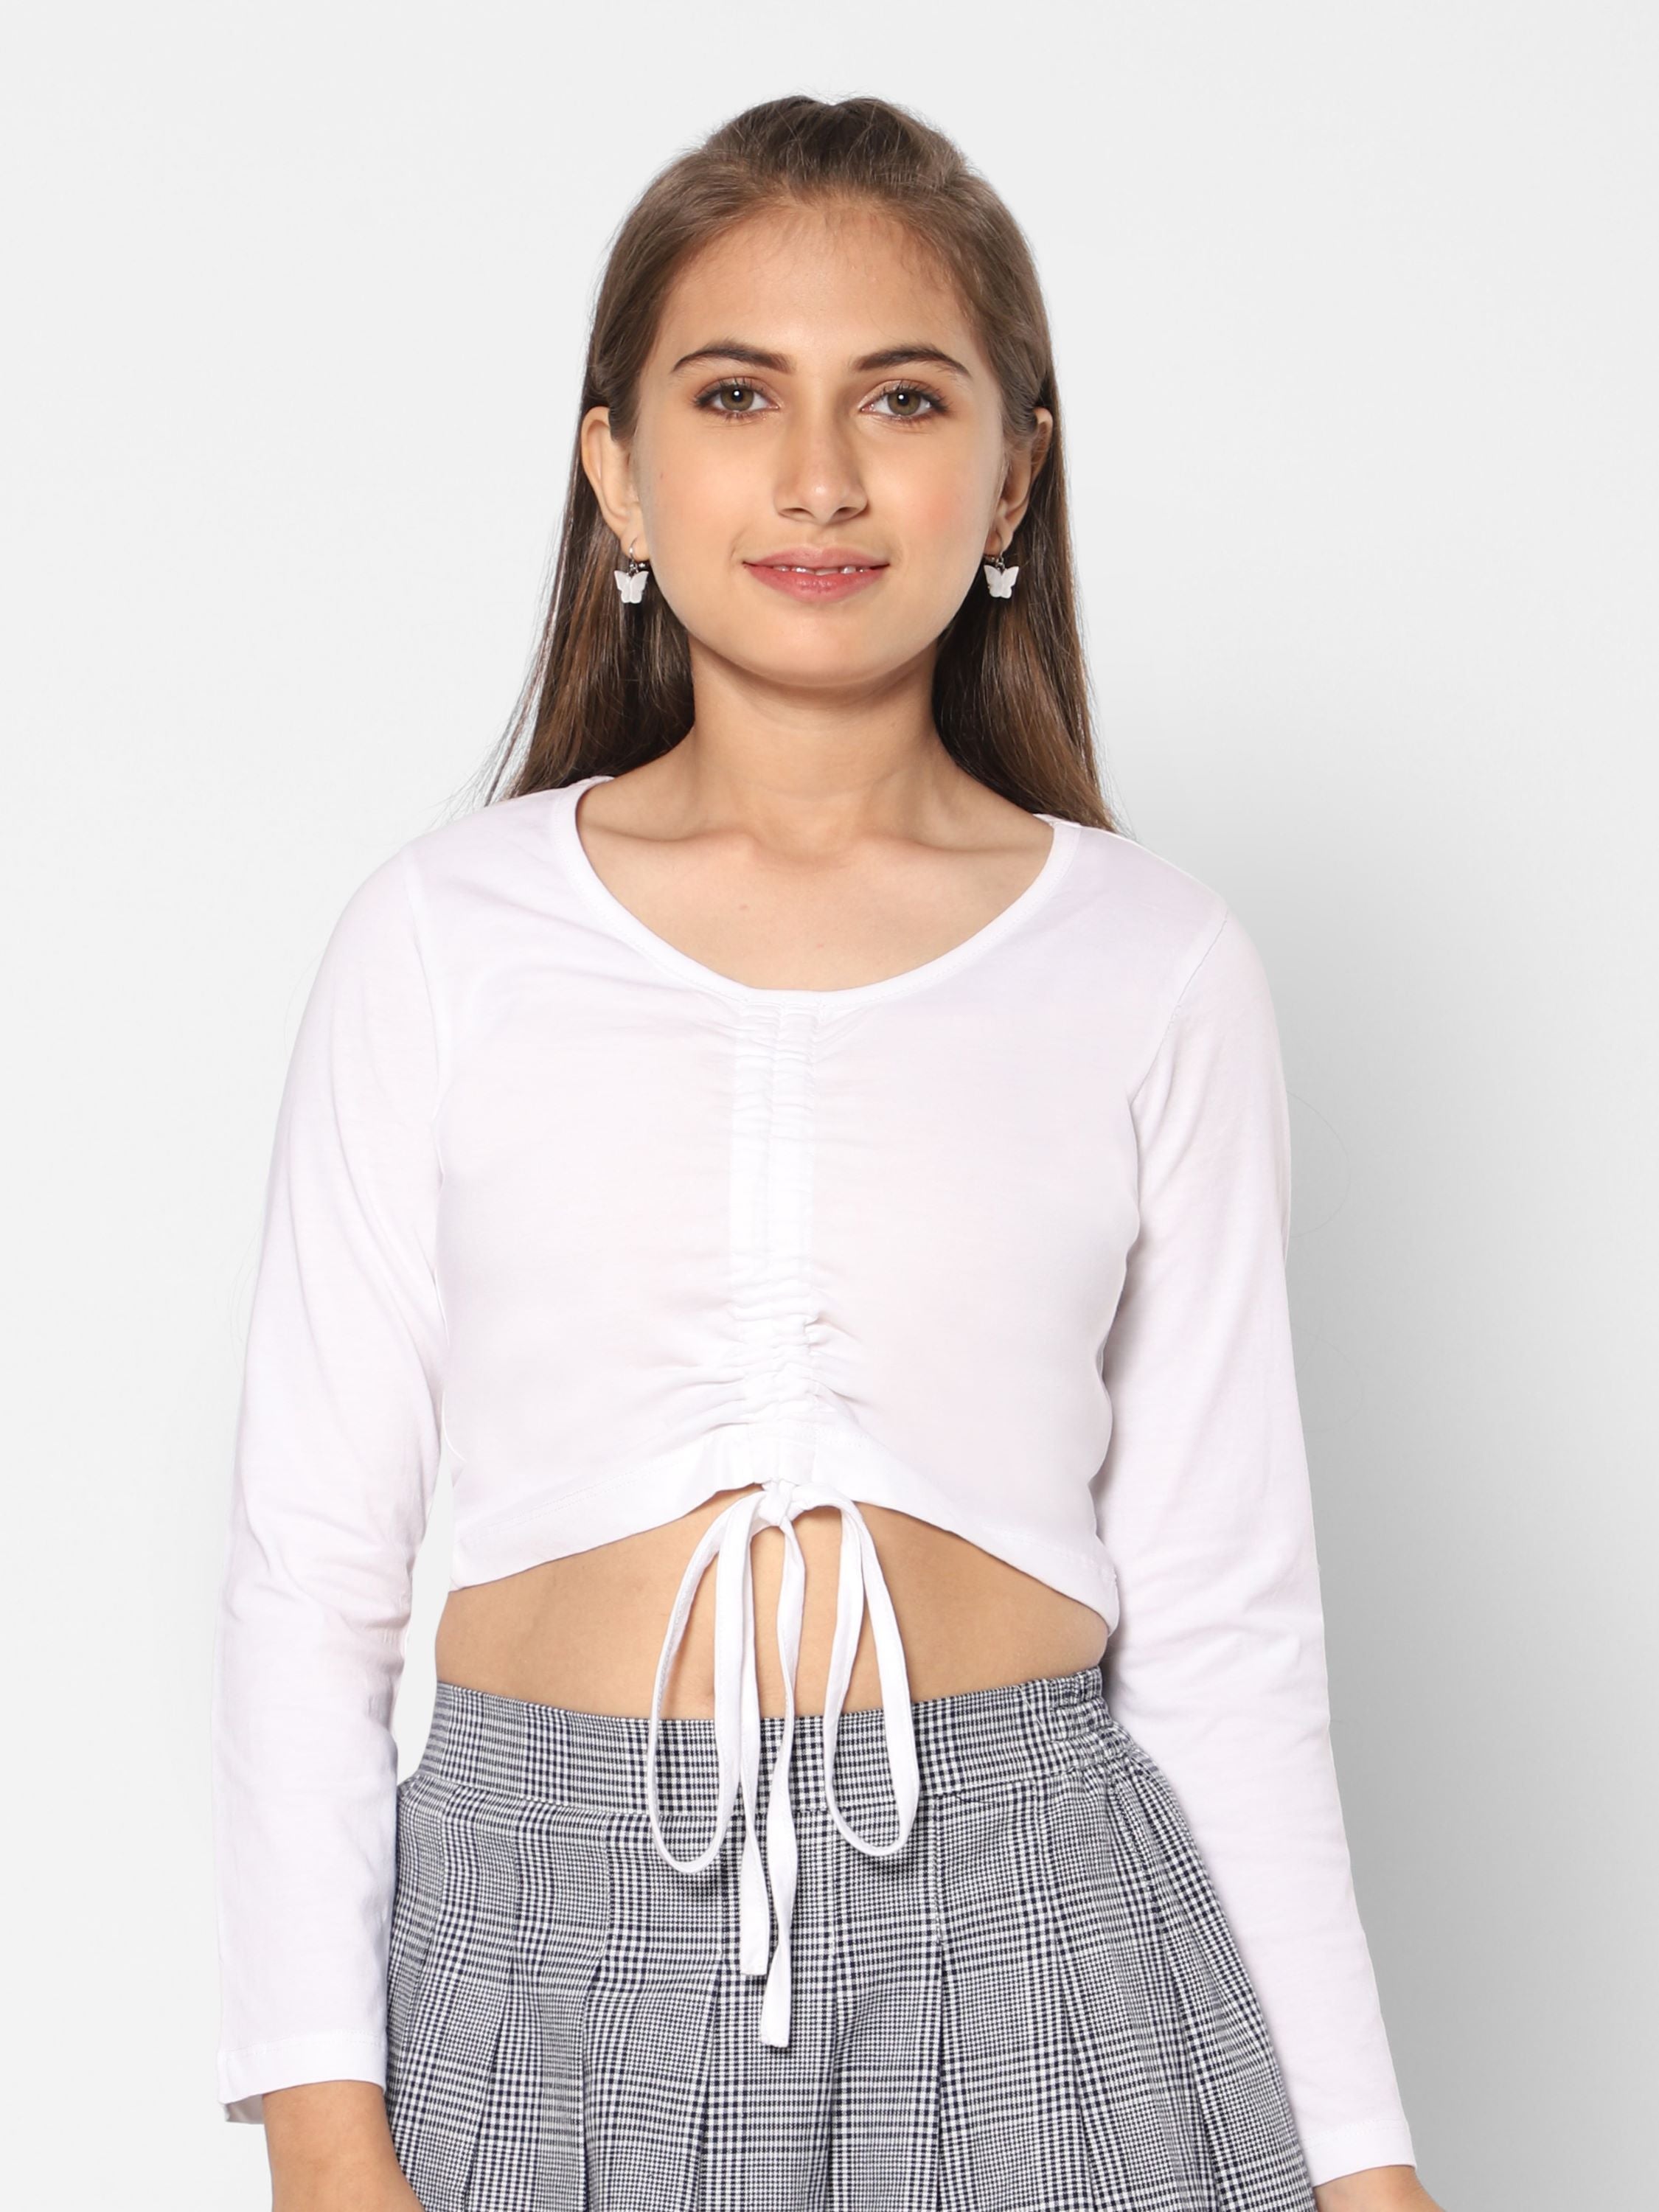 TeenTrums Girls Crop T-shirt Rouching -  White